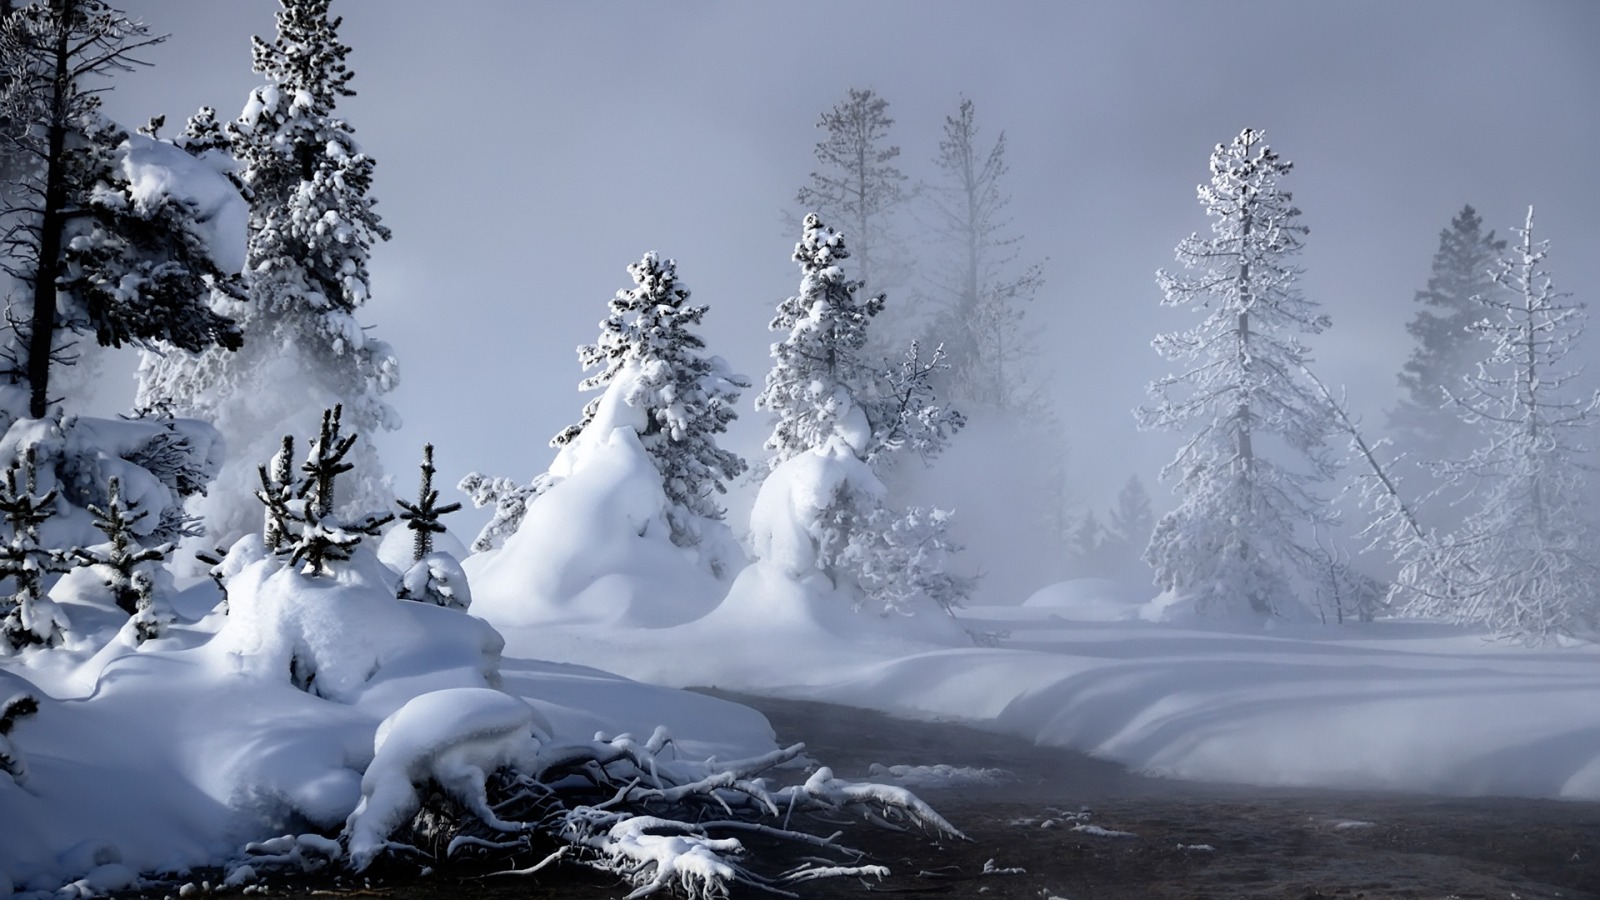 Mystic Winter Wallpaper Winter Nature Wallpaper in jpg format for free download